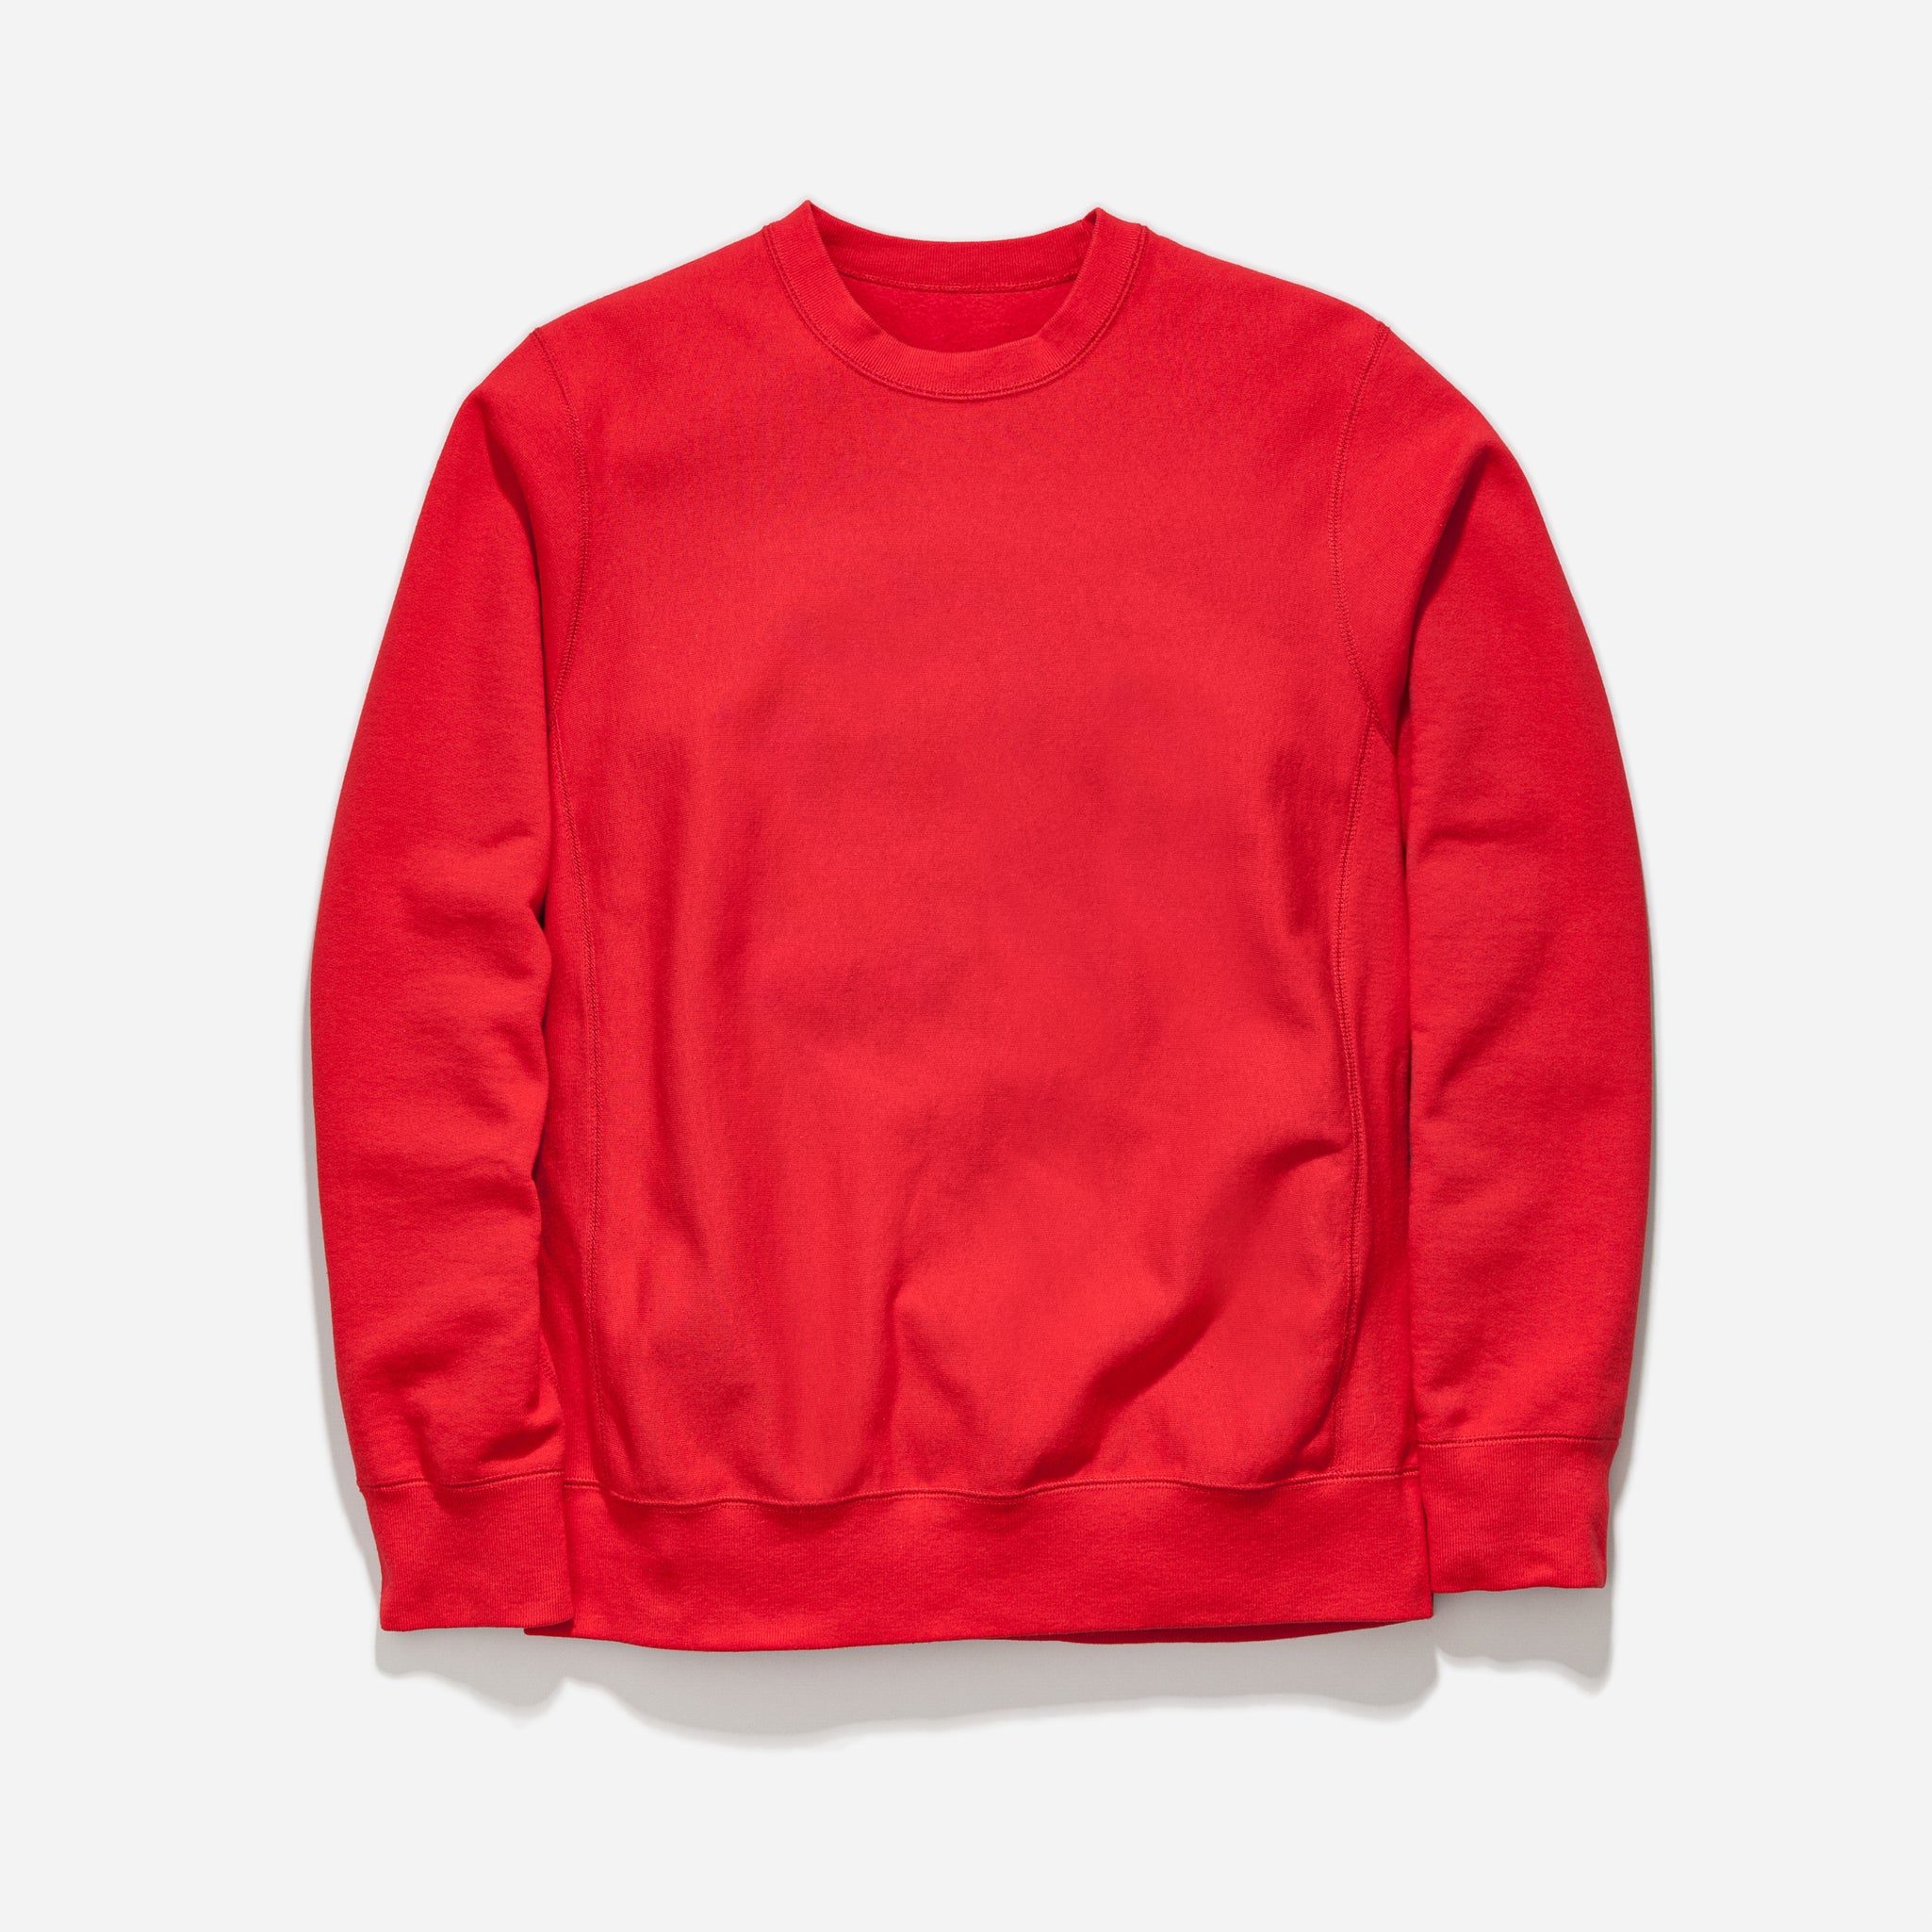 Download Buy Blank Red Sweatshirt Cheap Online